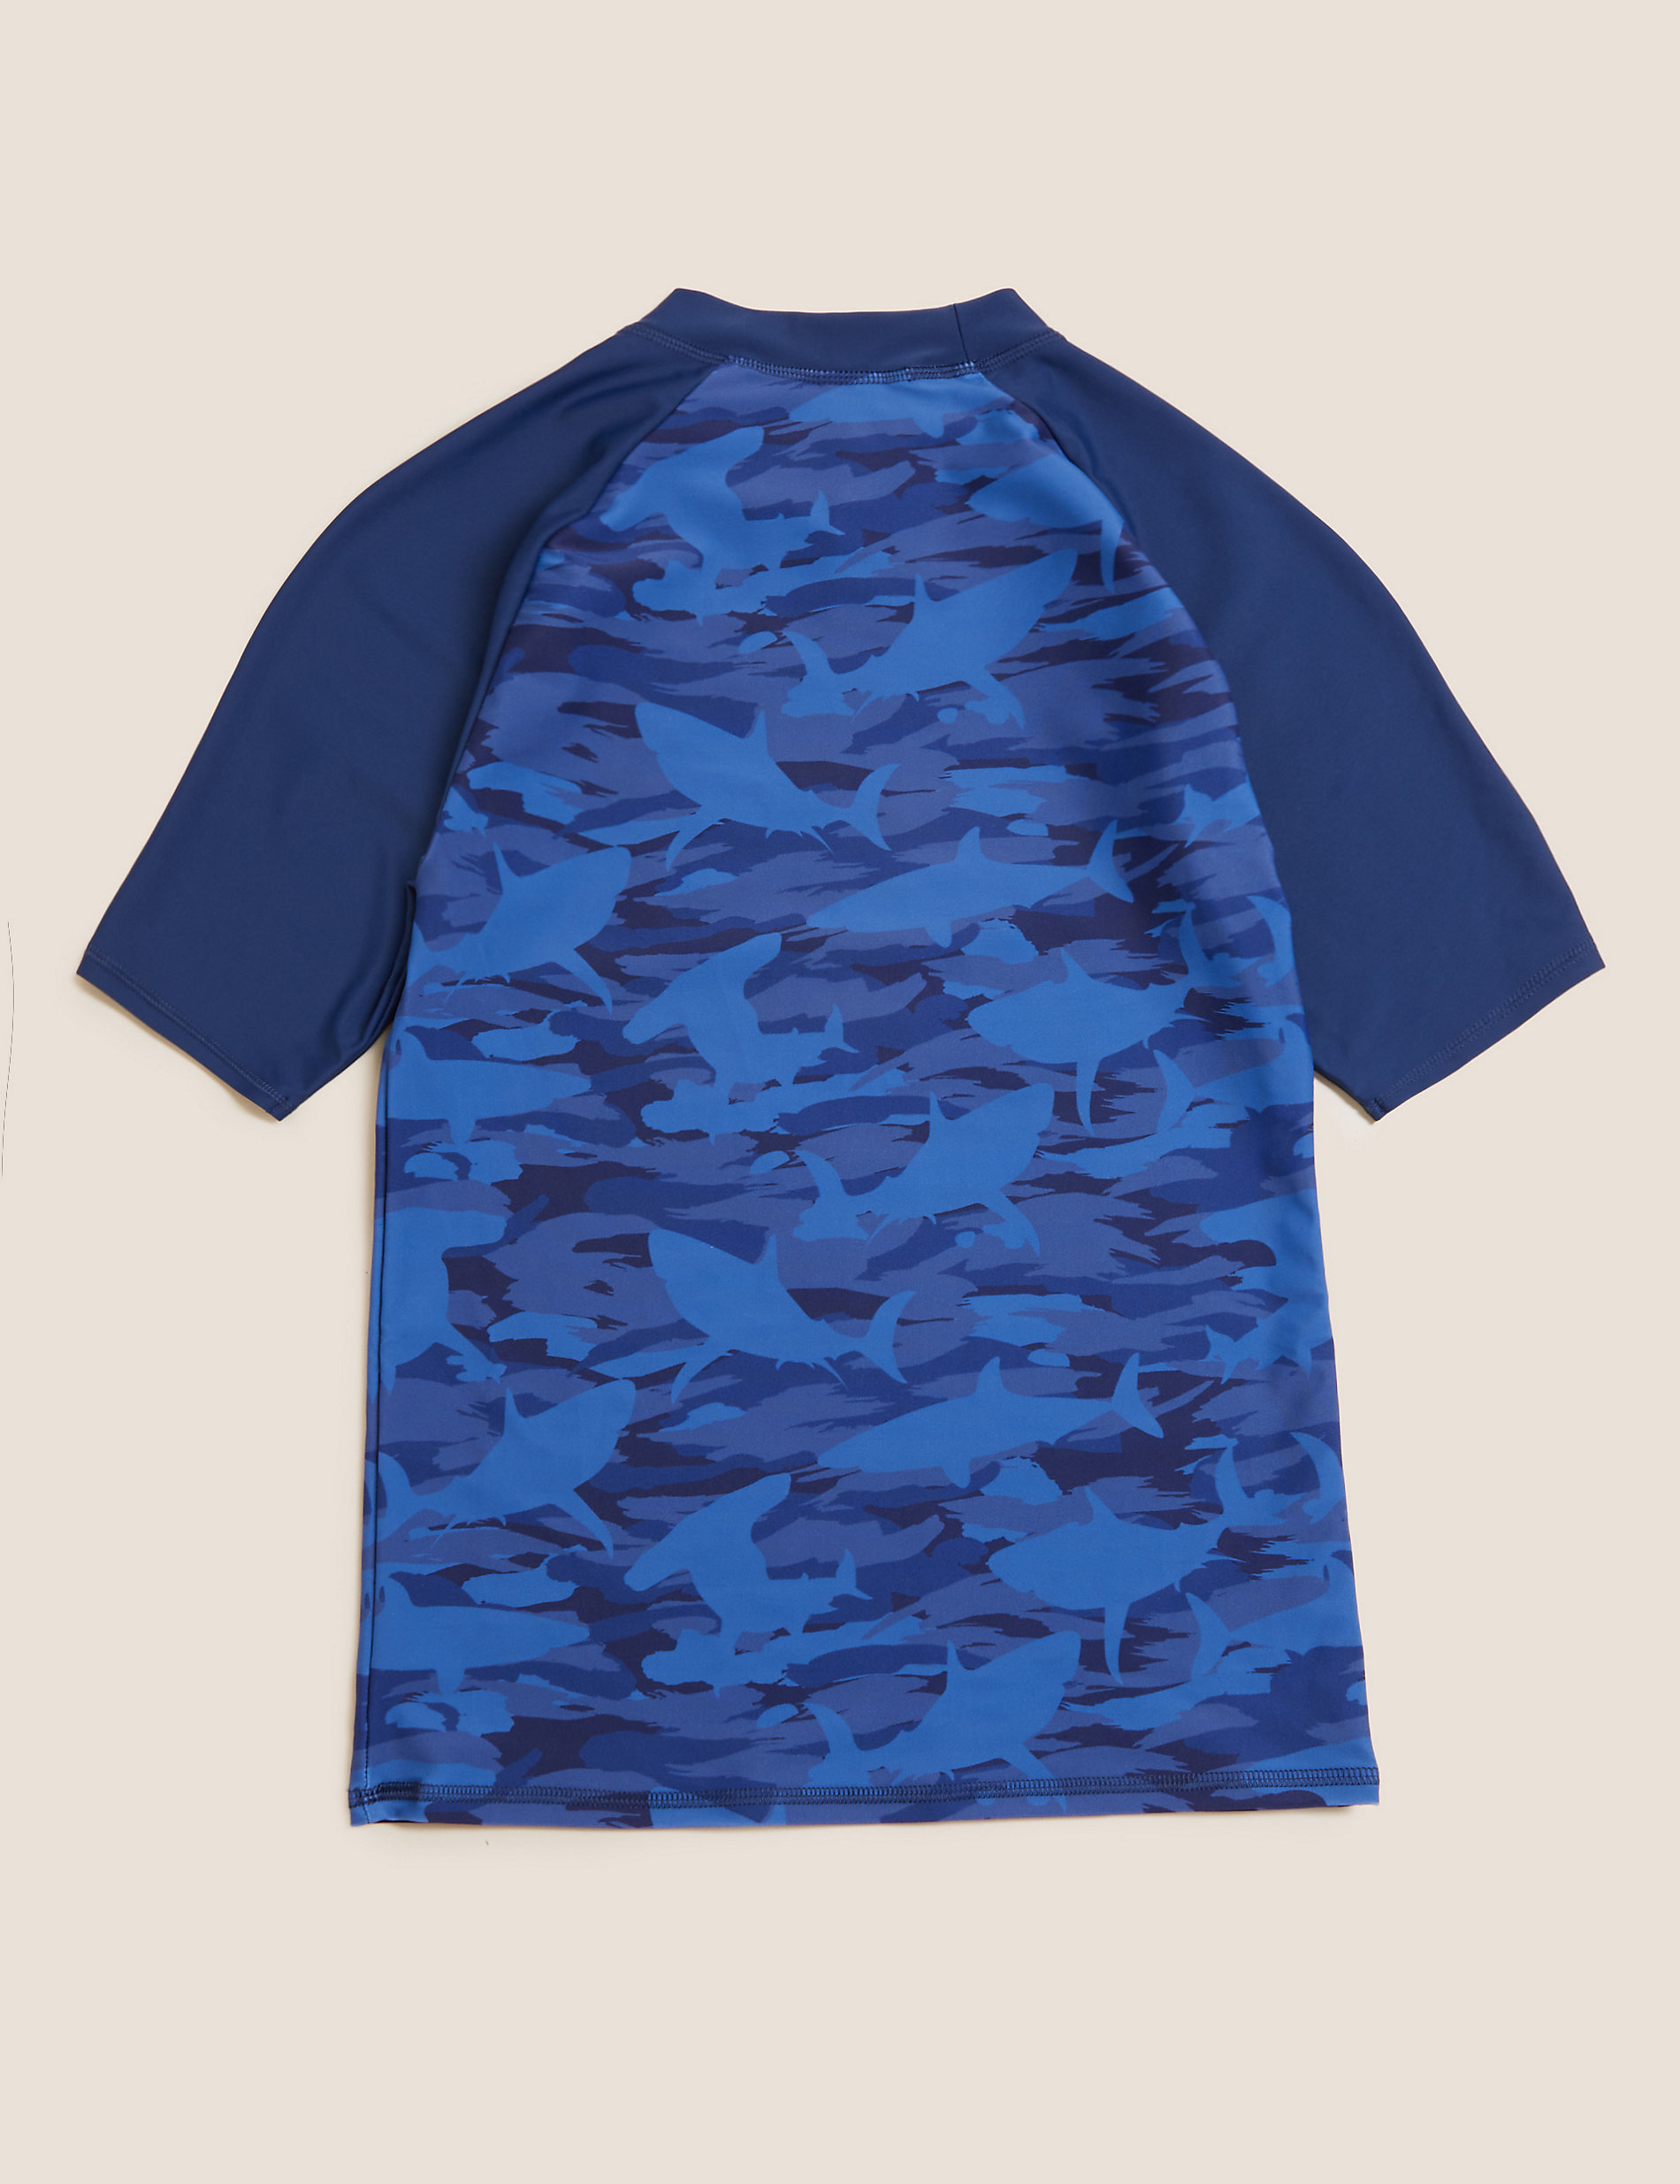 Shark Camouflage Rash Vest (6-16 Yrs)